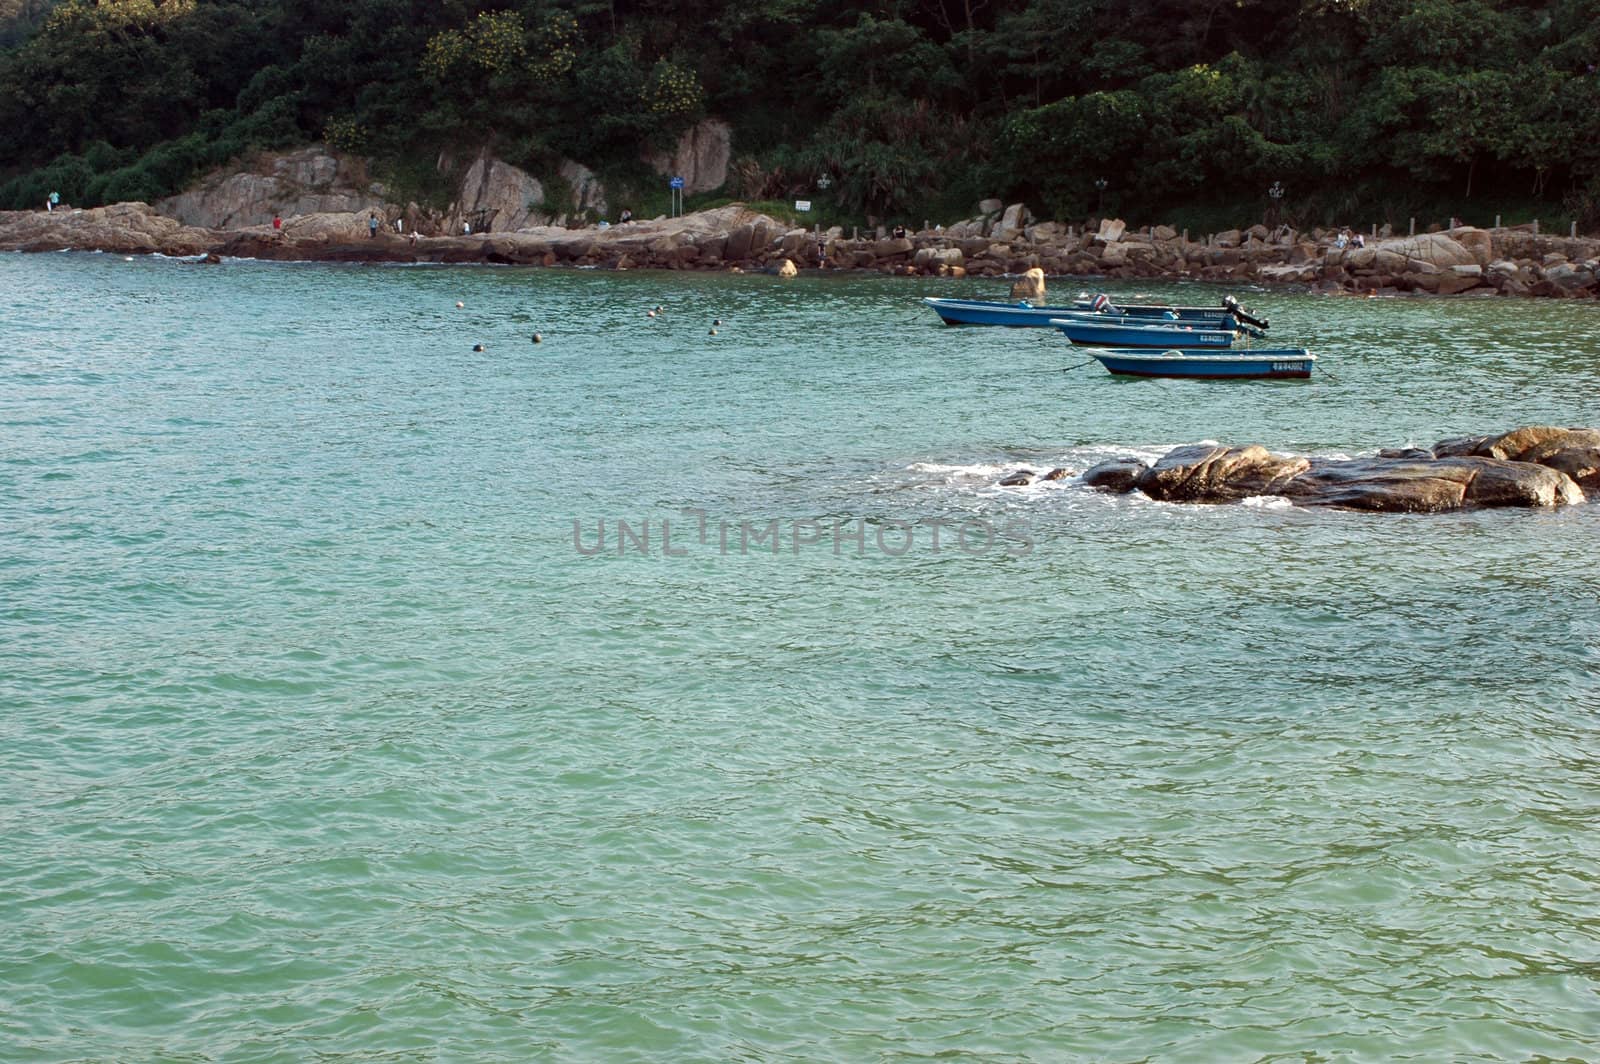 South China Sea, near Shenzhen city in Guangdong province. Simple boats waiting near coast.